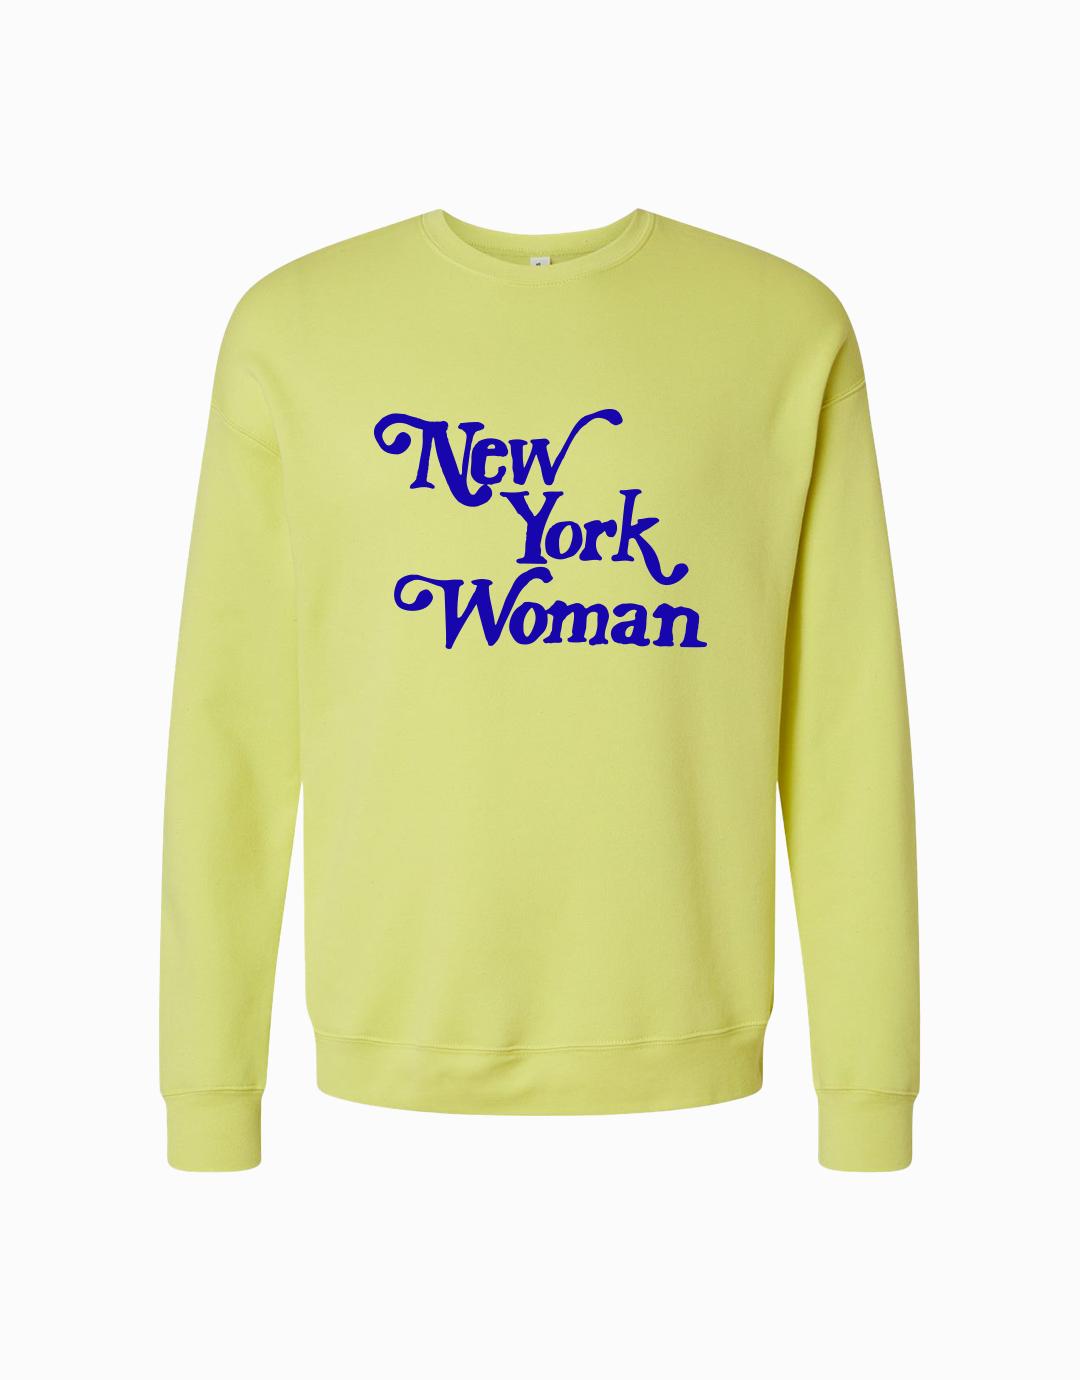 New York Woman Sweatshirt - Neon Yellow/Blue